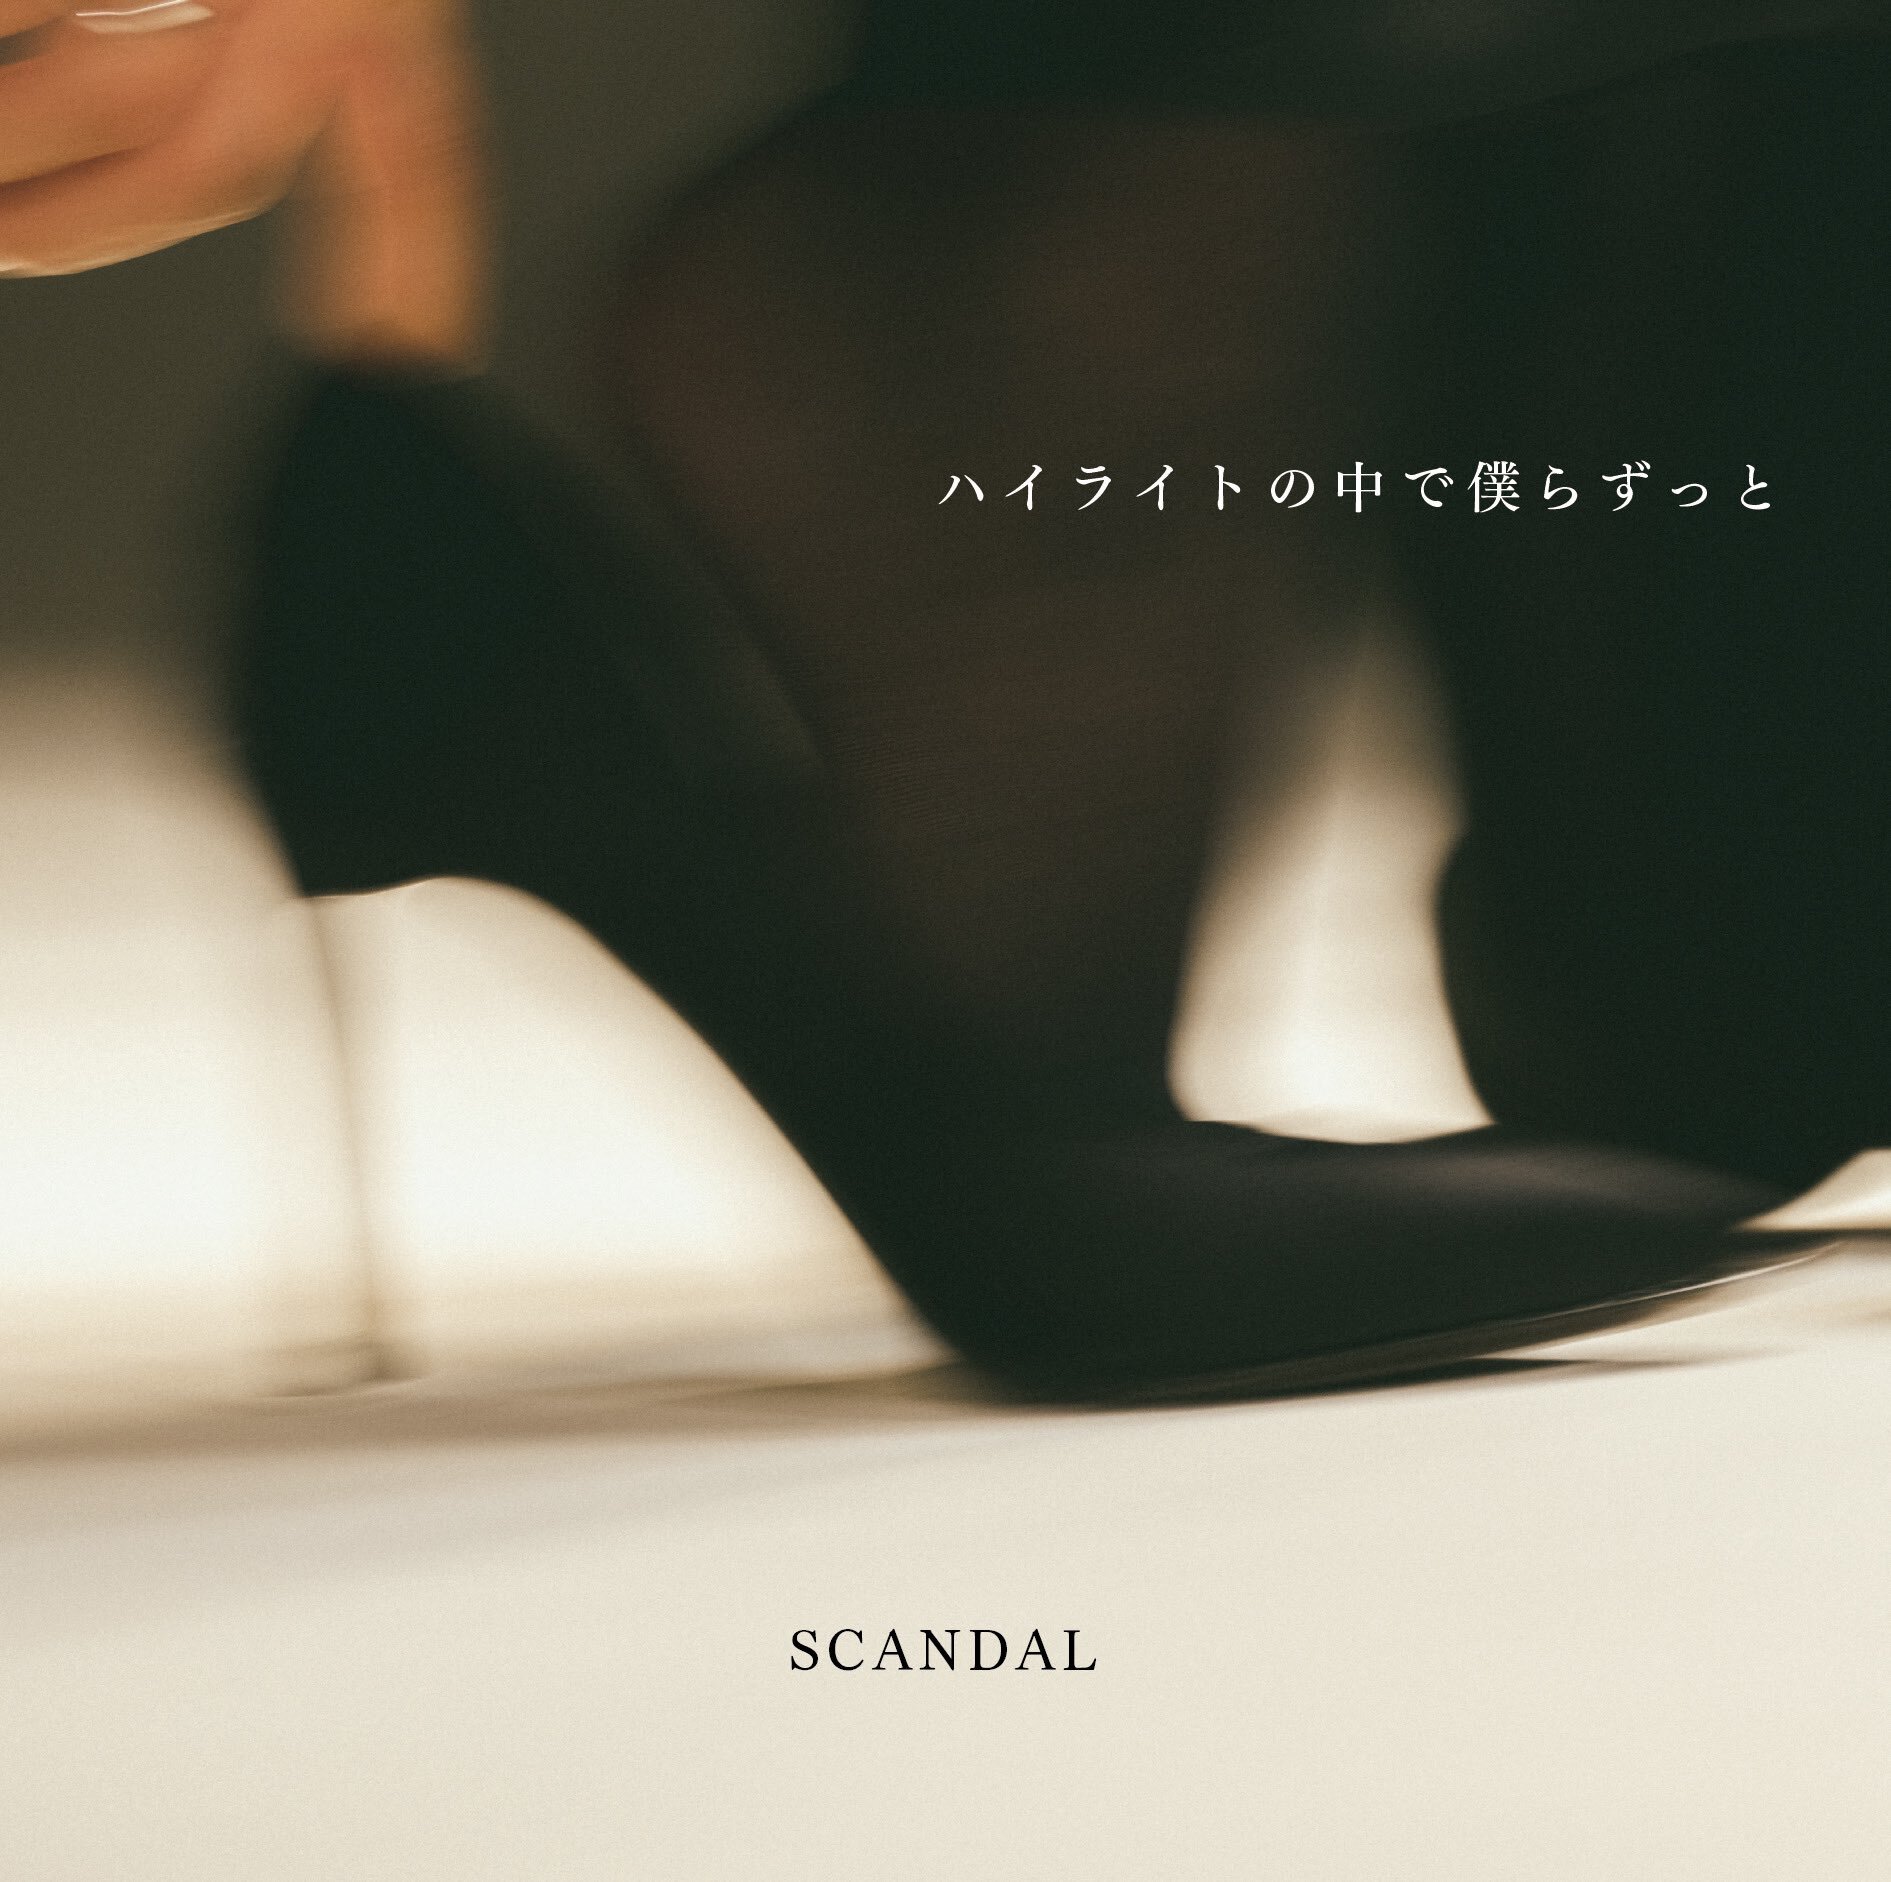 Scandal : Highlight No Nakade Bokura Zutto